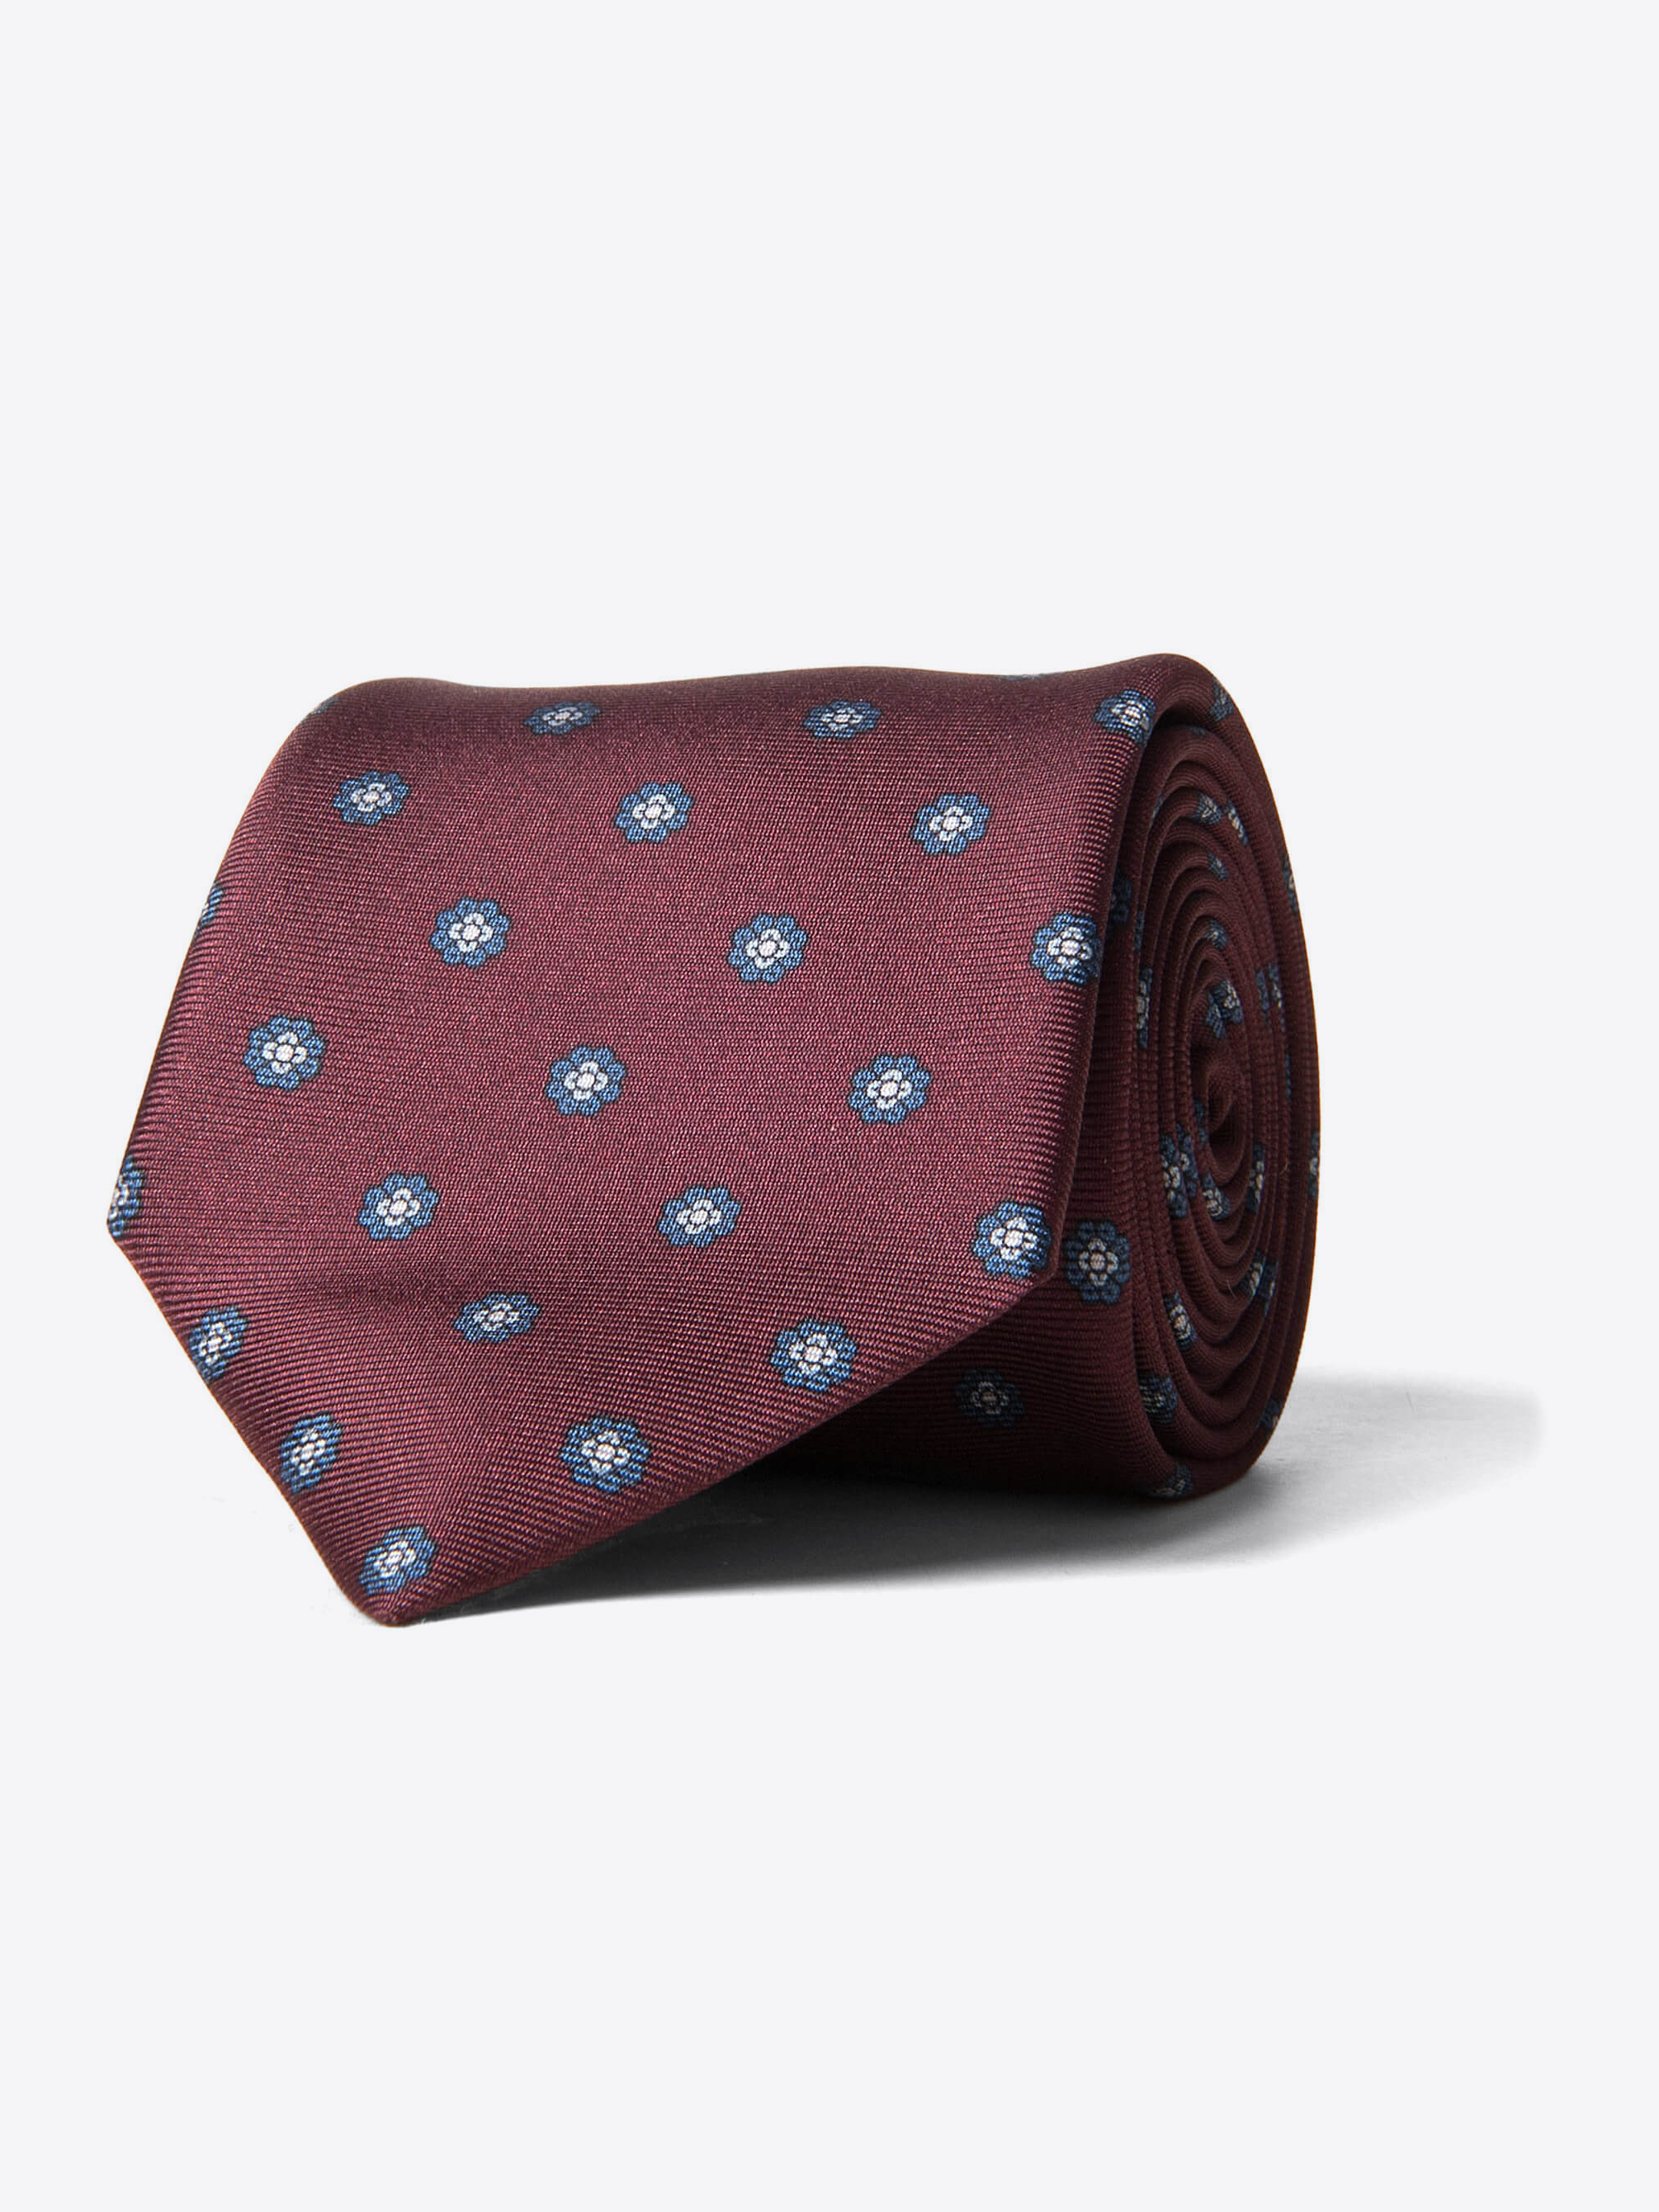 Zoom Image of Burgundy and Blue Silk Foulard Tie